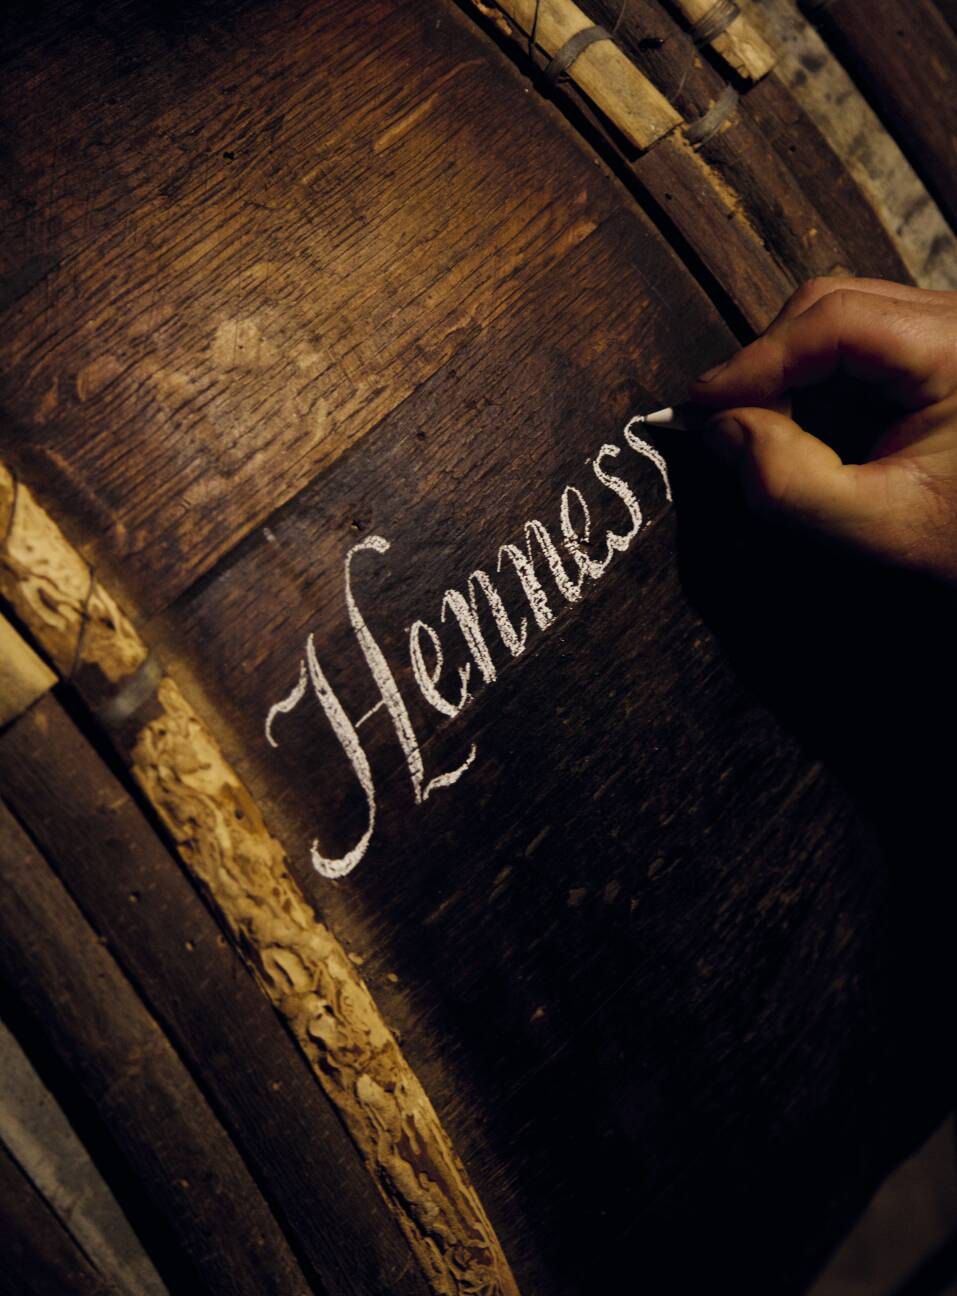 LVMH Moët Hennesy Brands